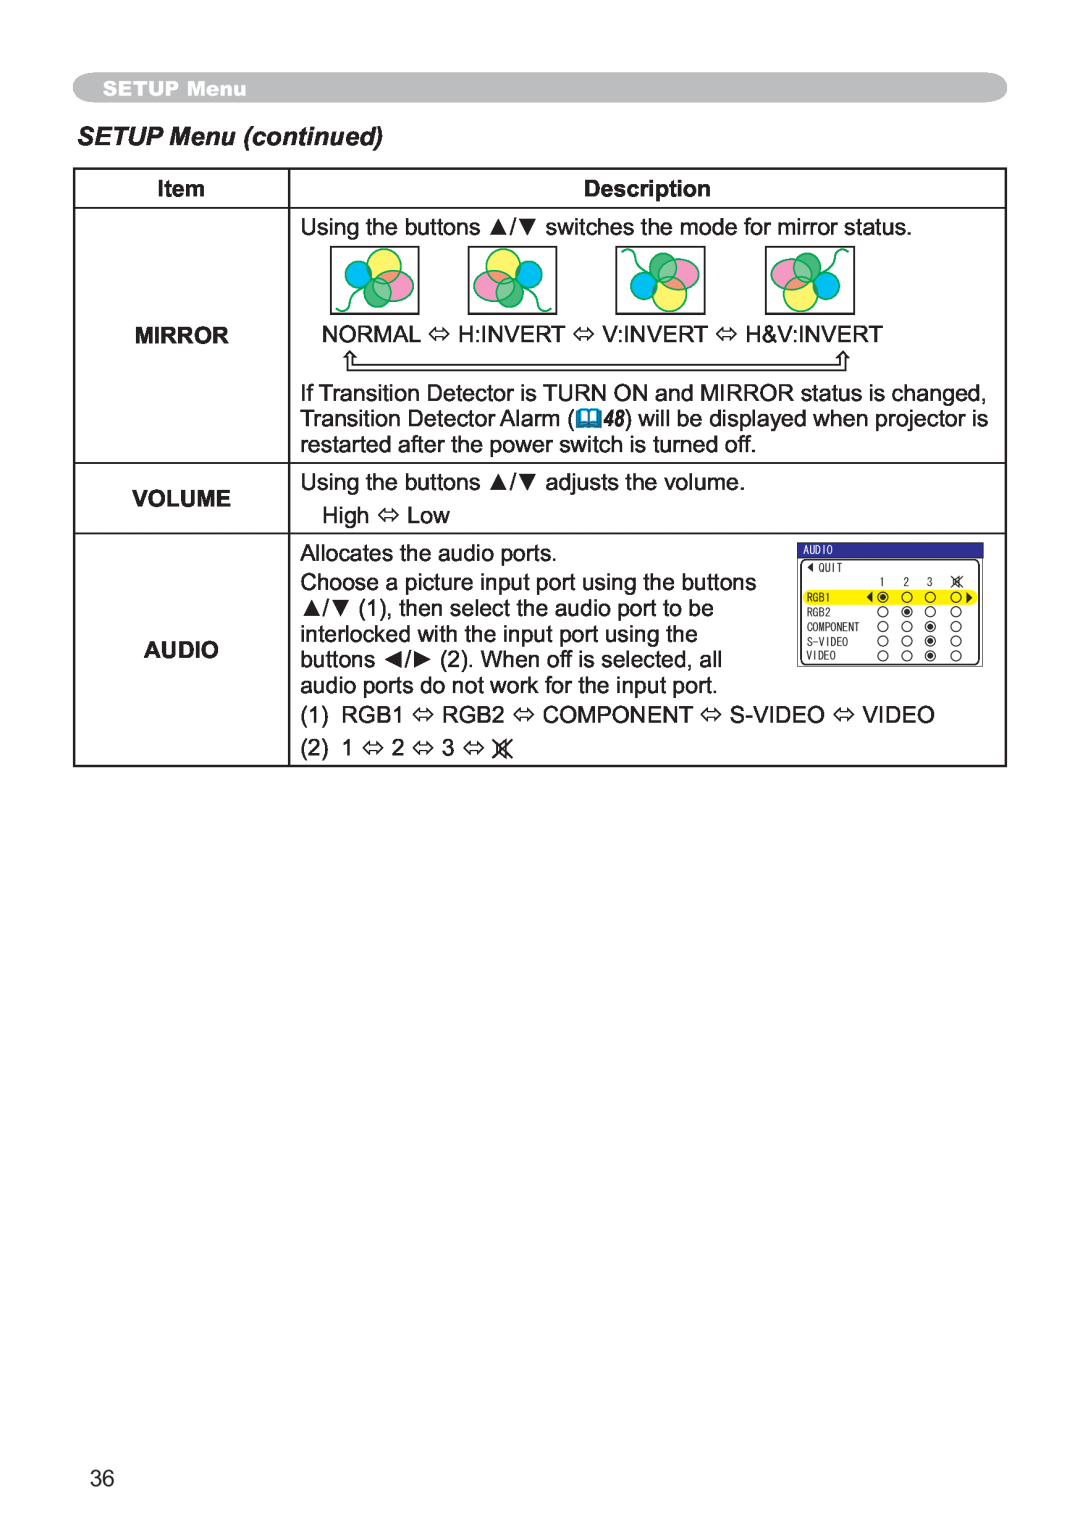 Hitachi ED-X12 user manual SETUP Menu continued, Description, Mirror, Volume, Audio 